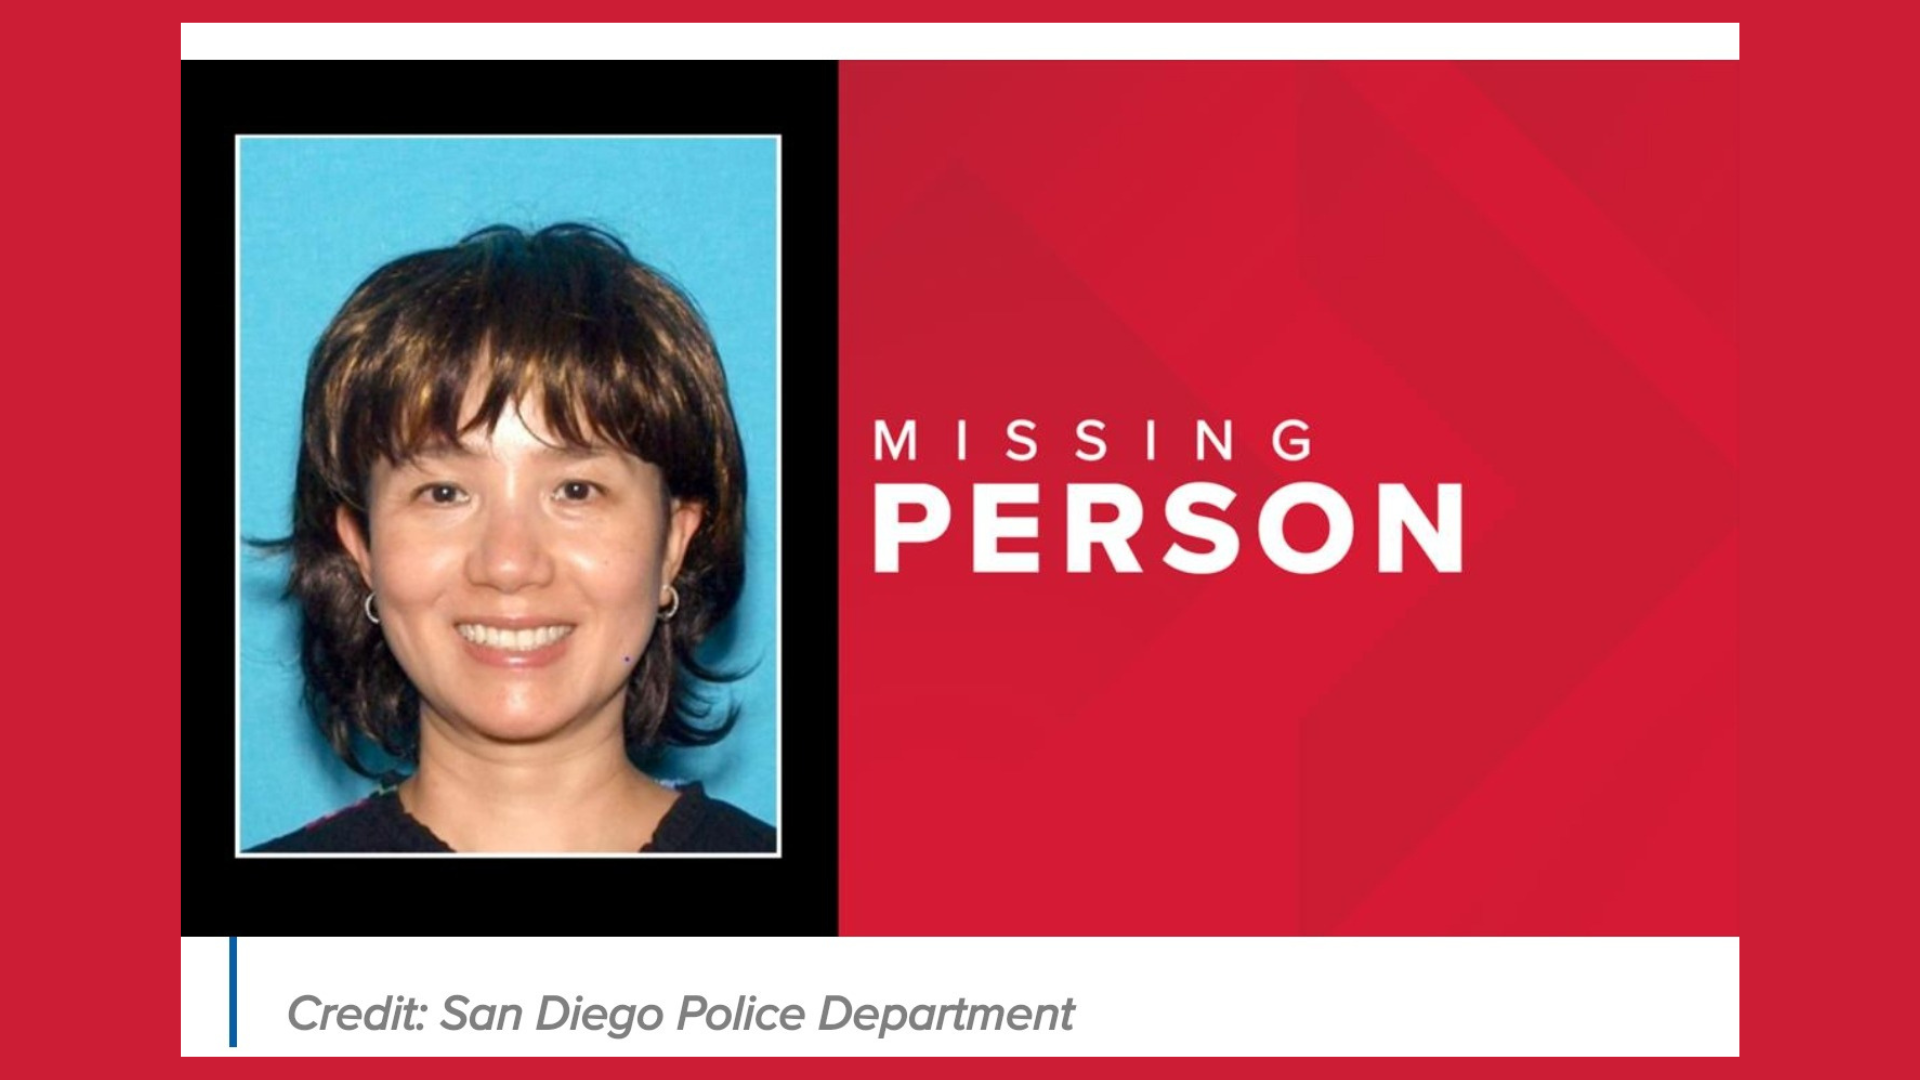 Missing Person Alert: San Diego Police Seek Public’s Help to Find Missing Hiker